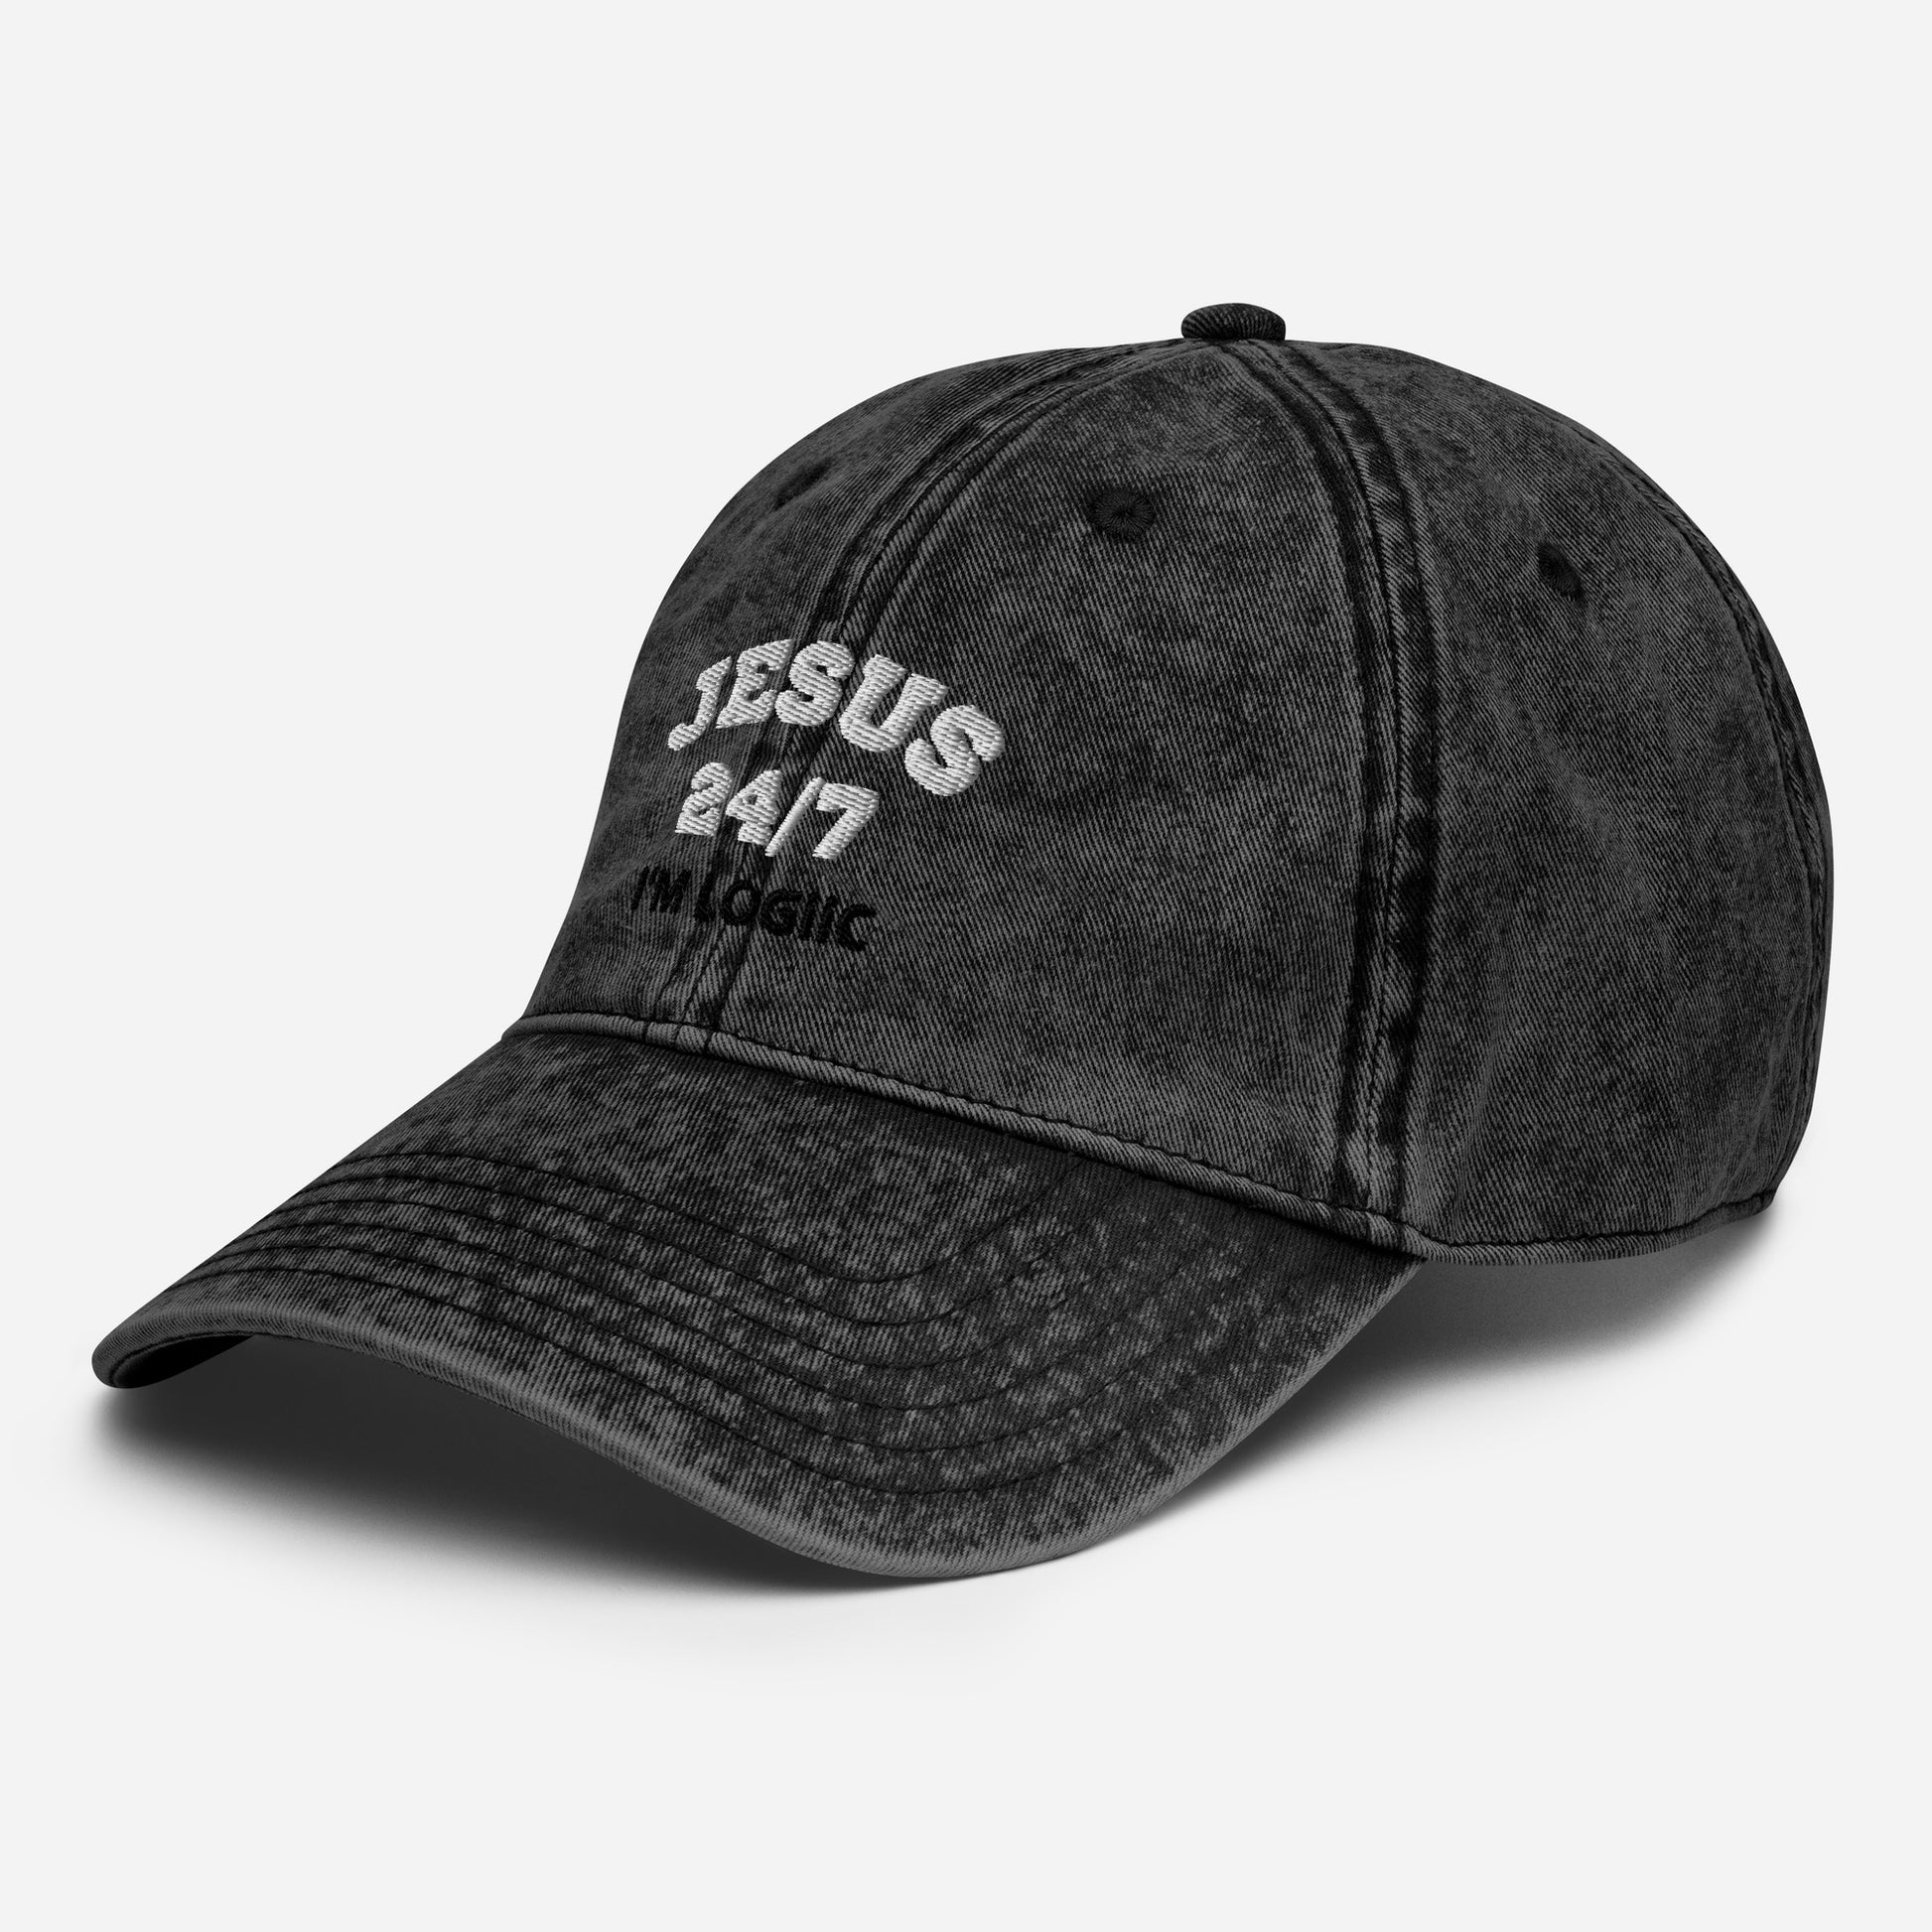 Jesus 24/7 Embroidery Vintage Cotton Twill Cap - Hats